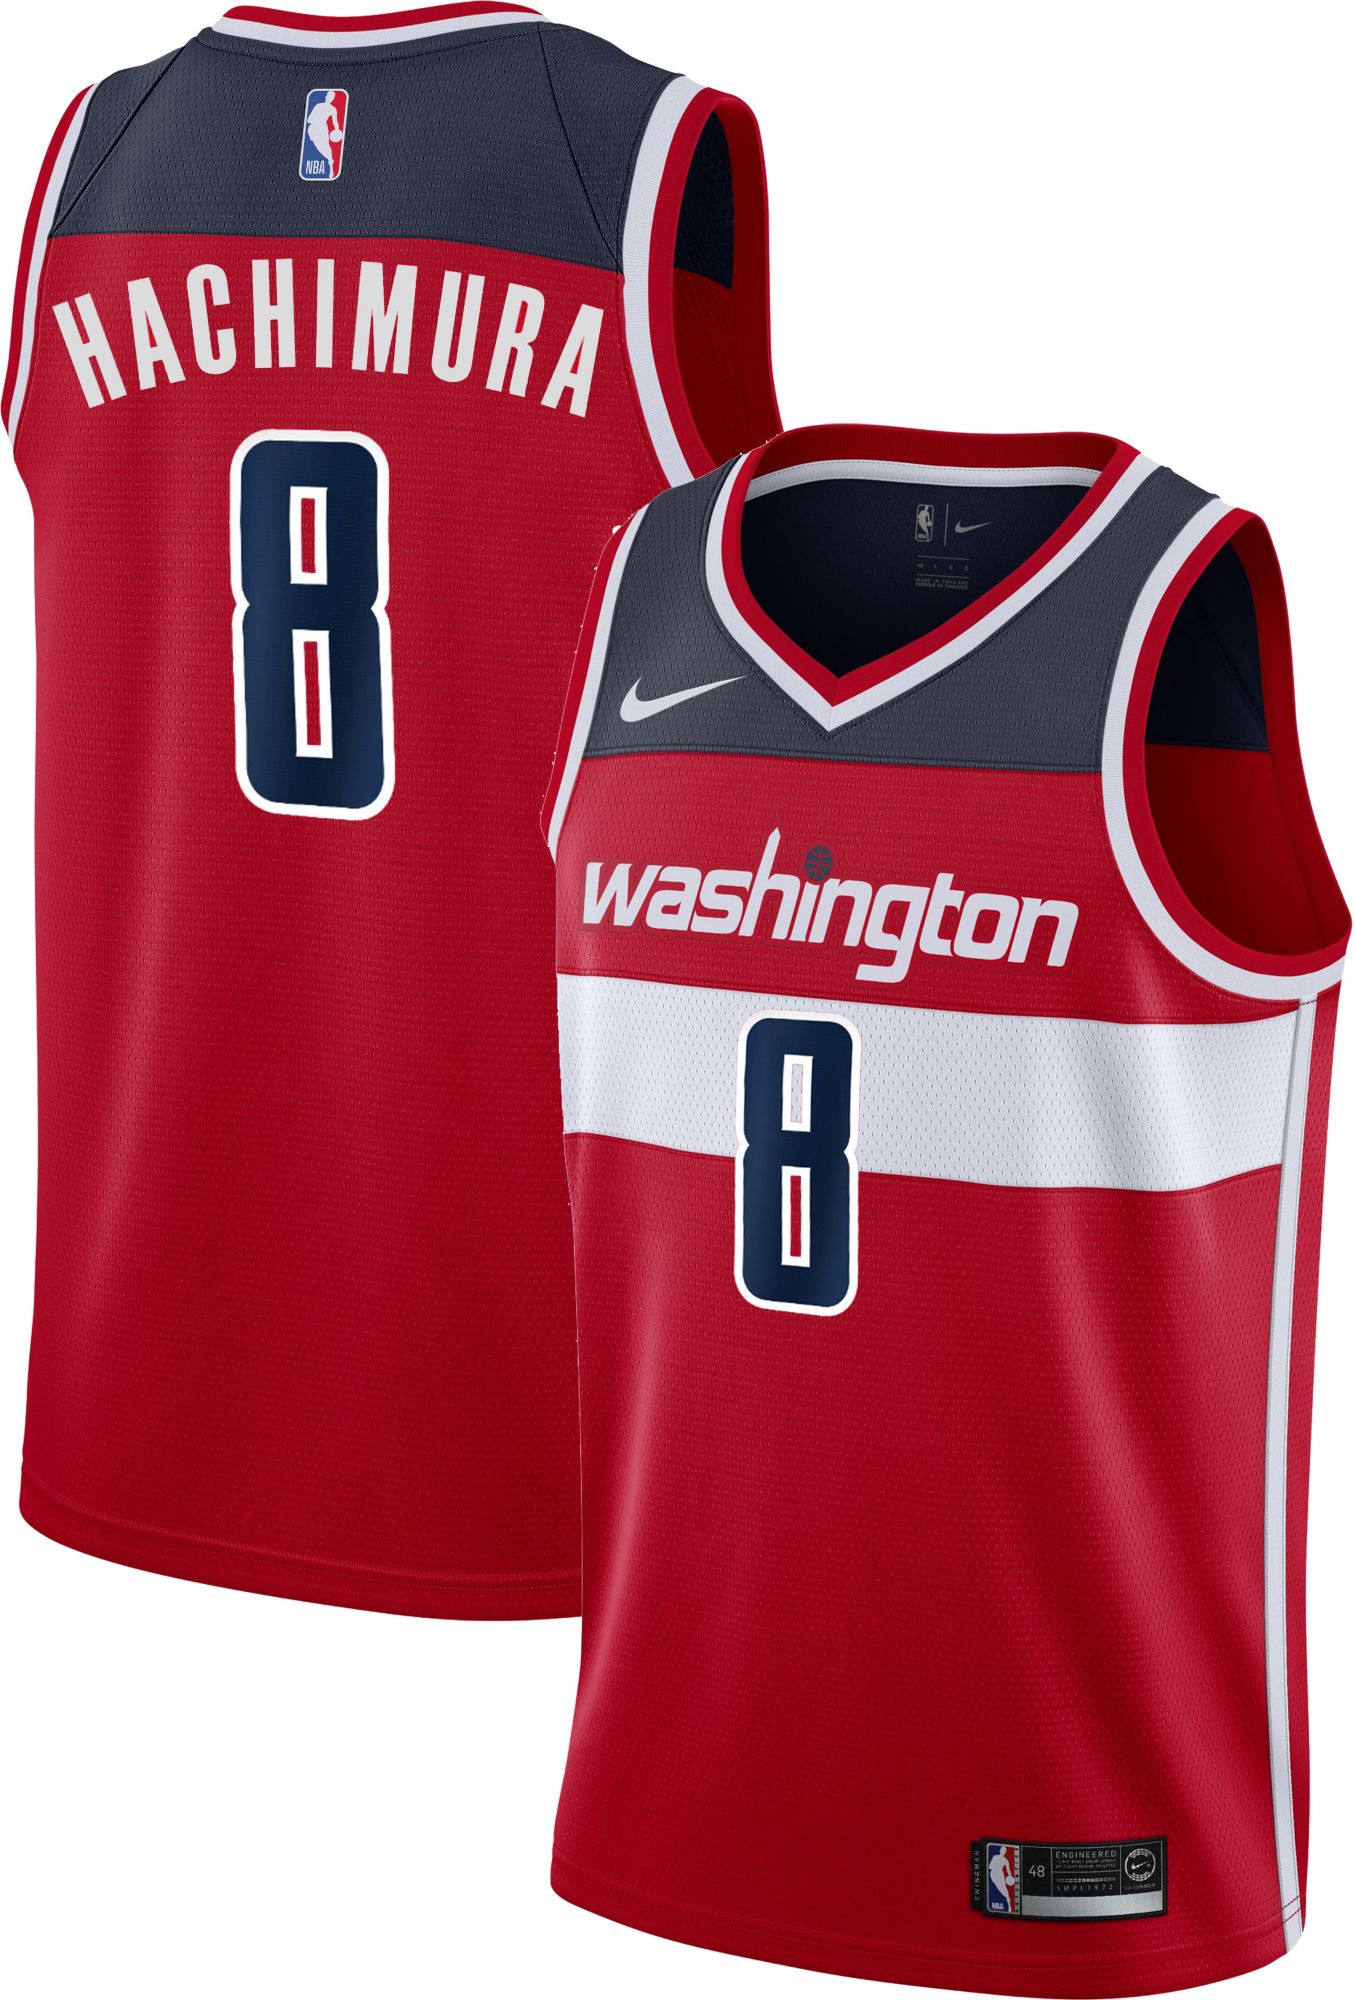 Washington Wizards Rui Hachimura #8 